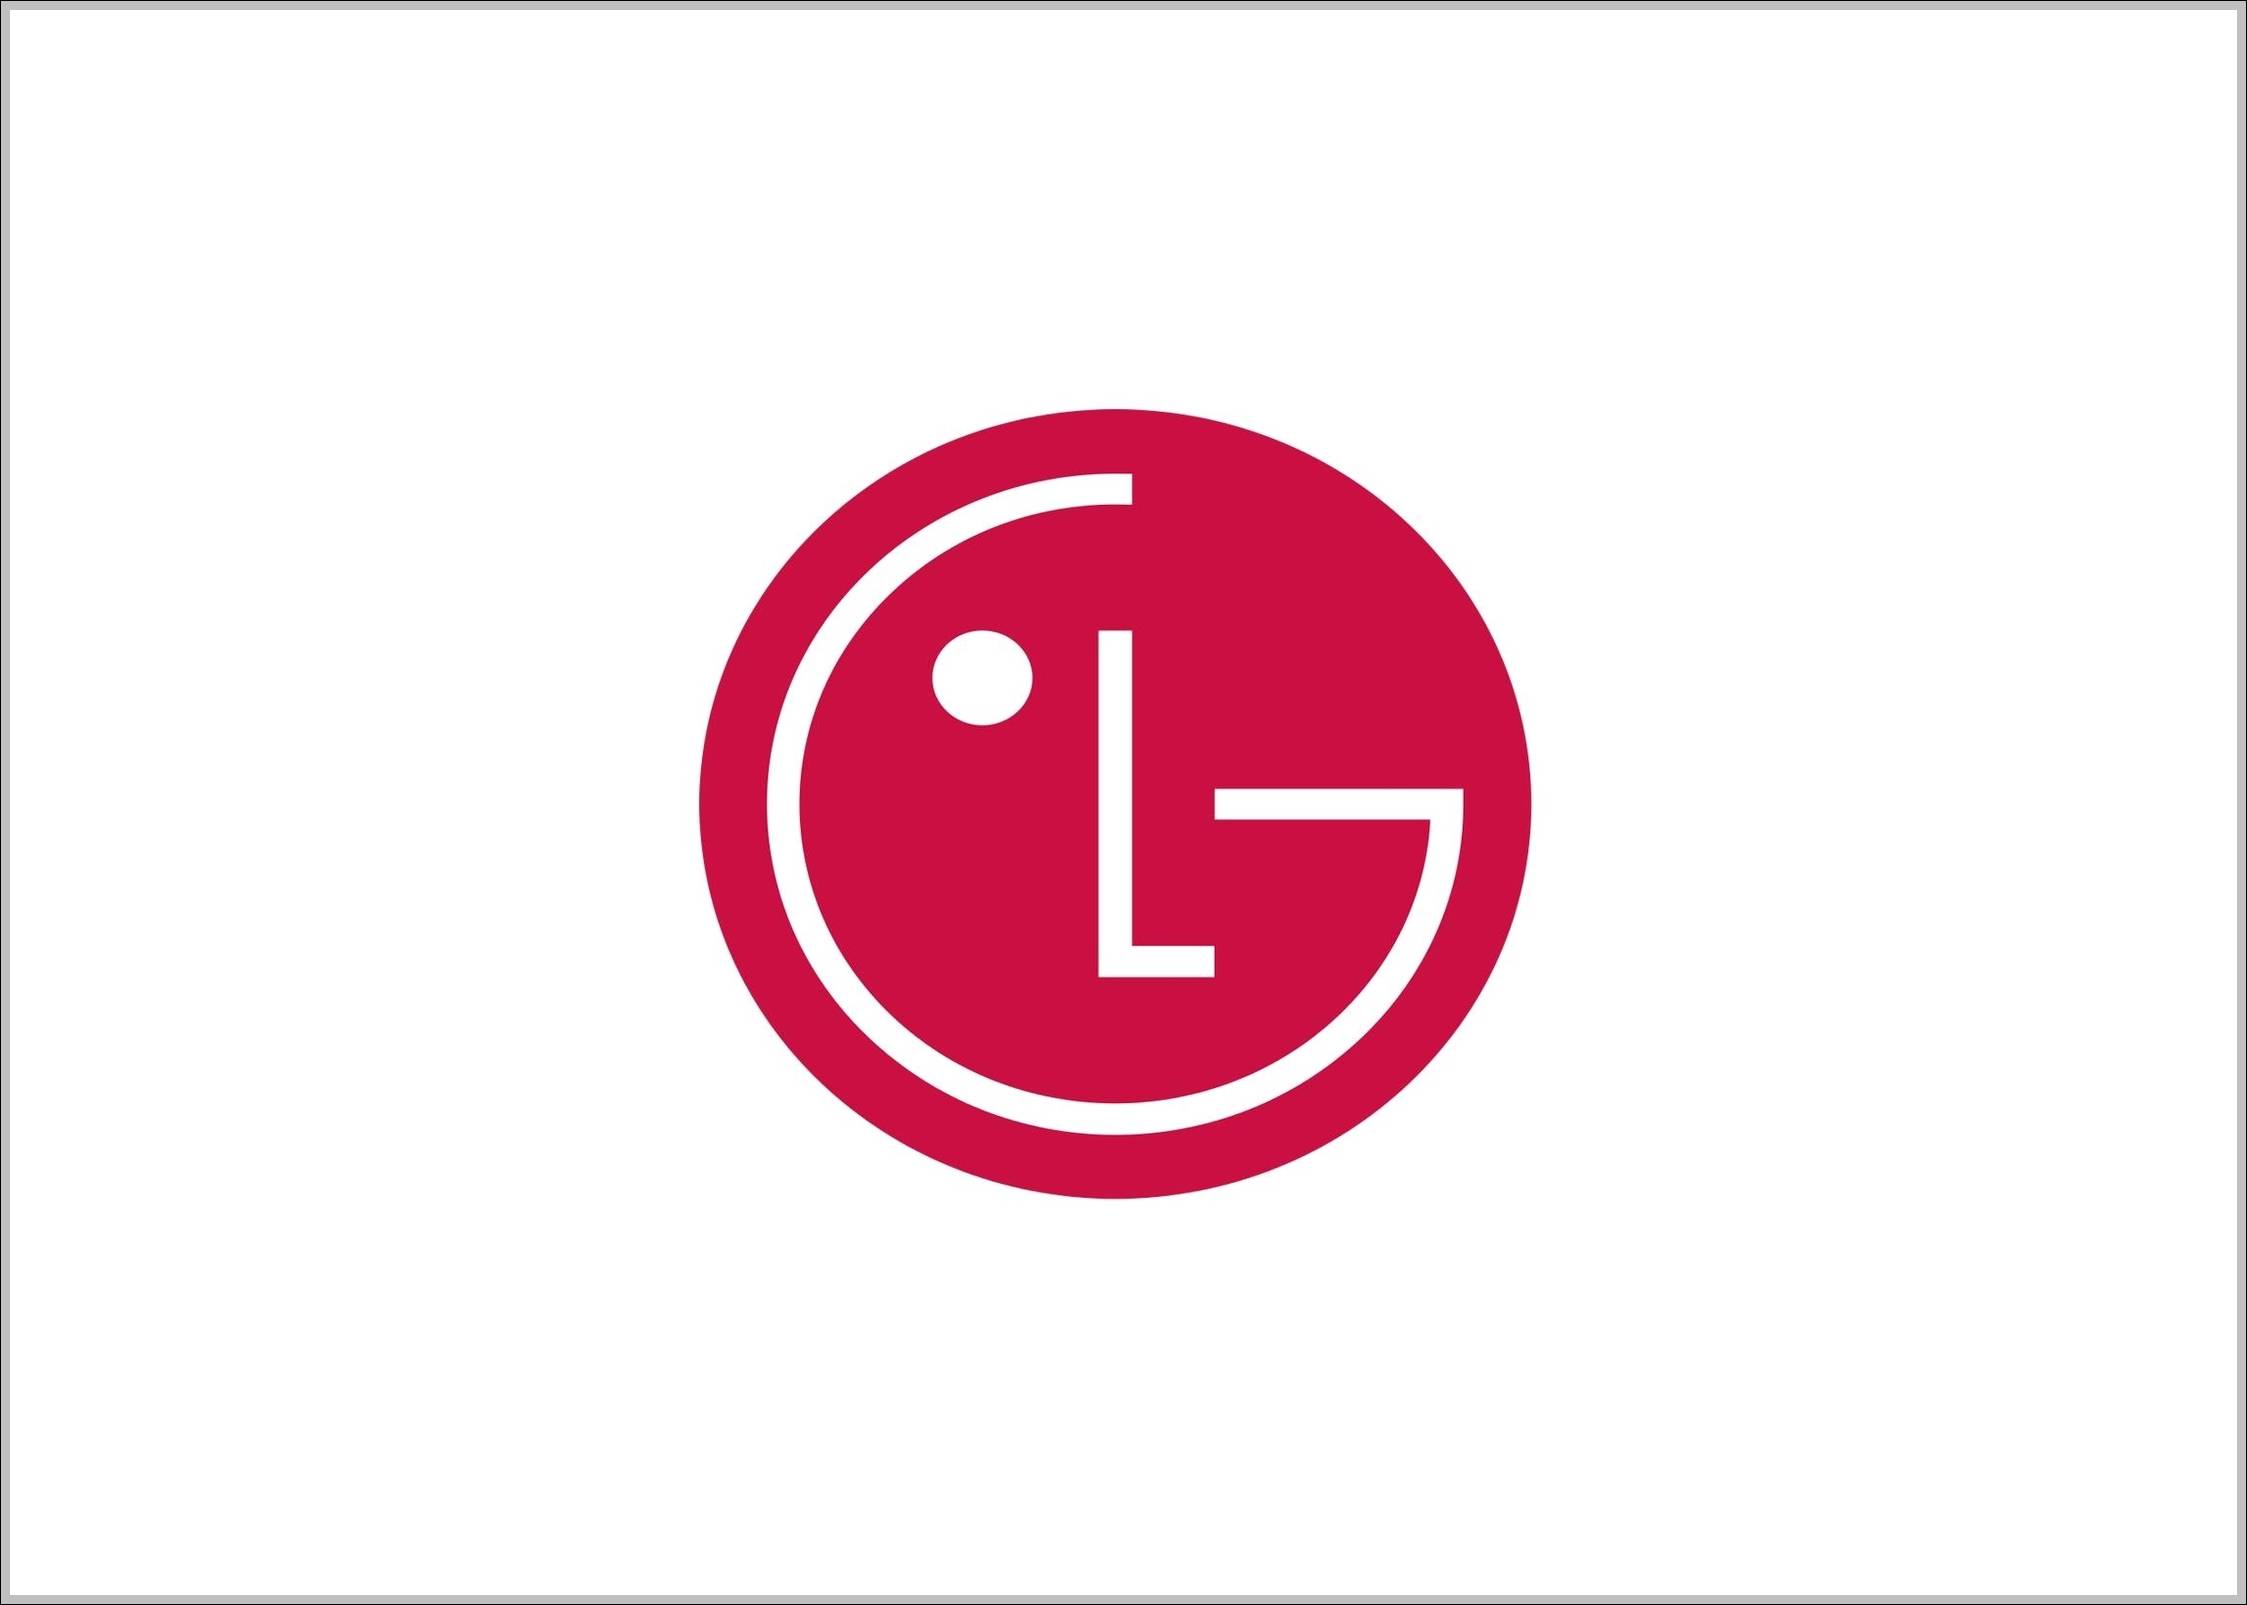 LG logo face